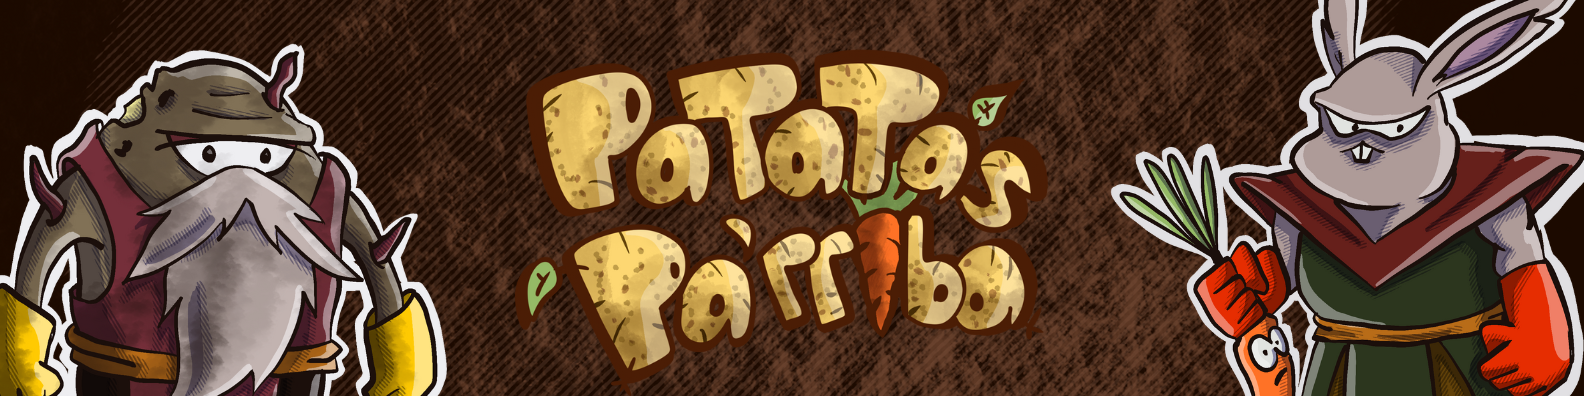 Patatas Parriba